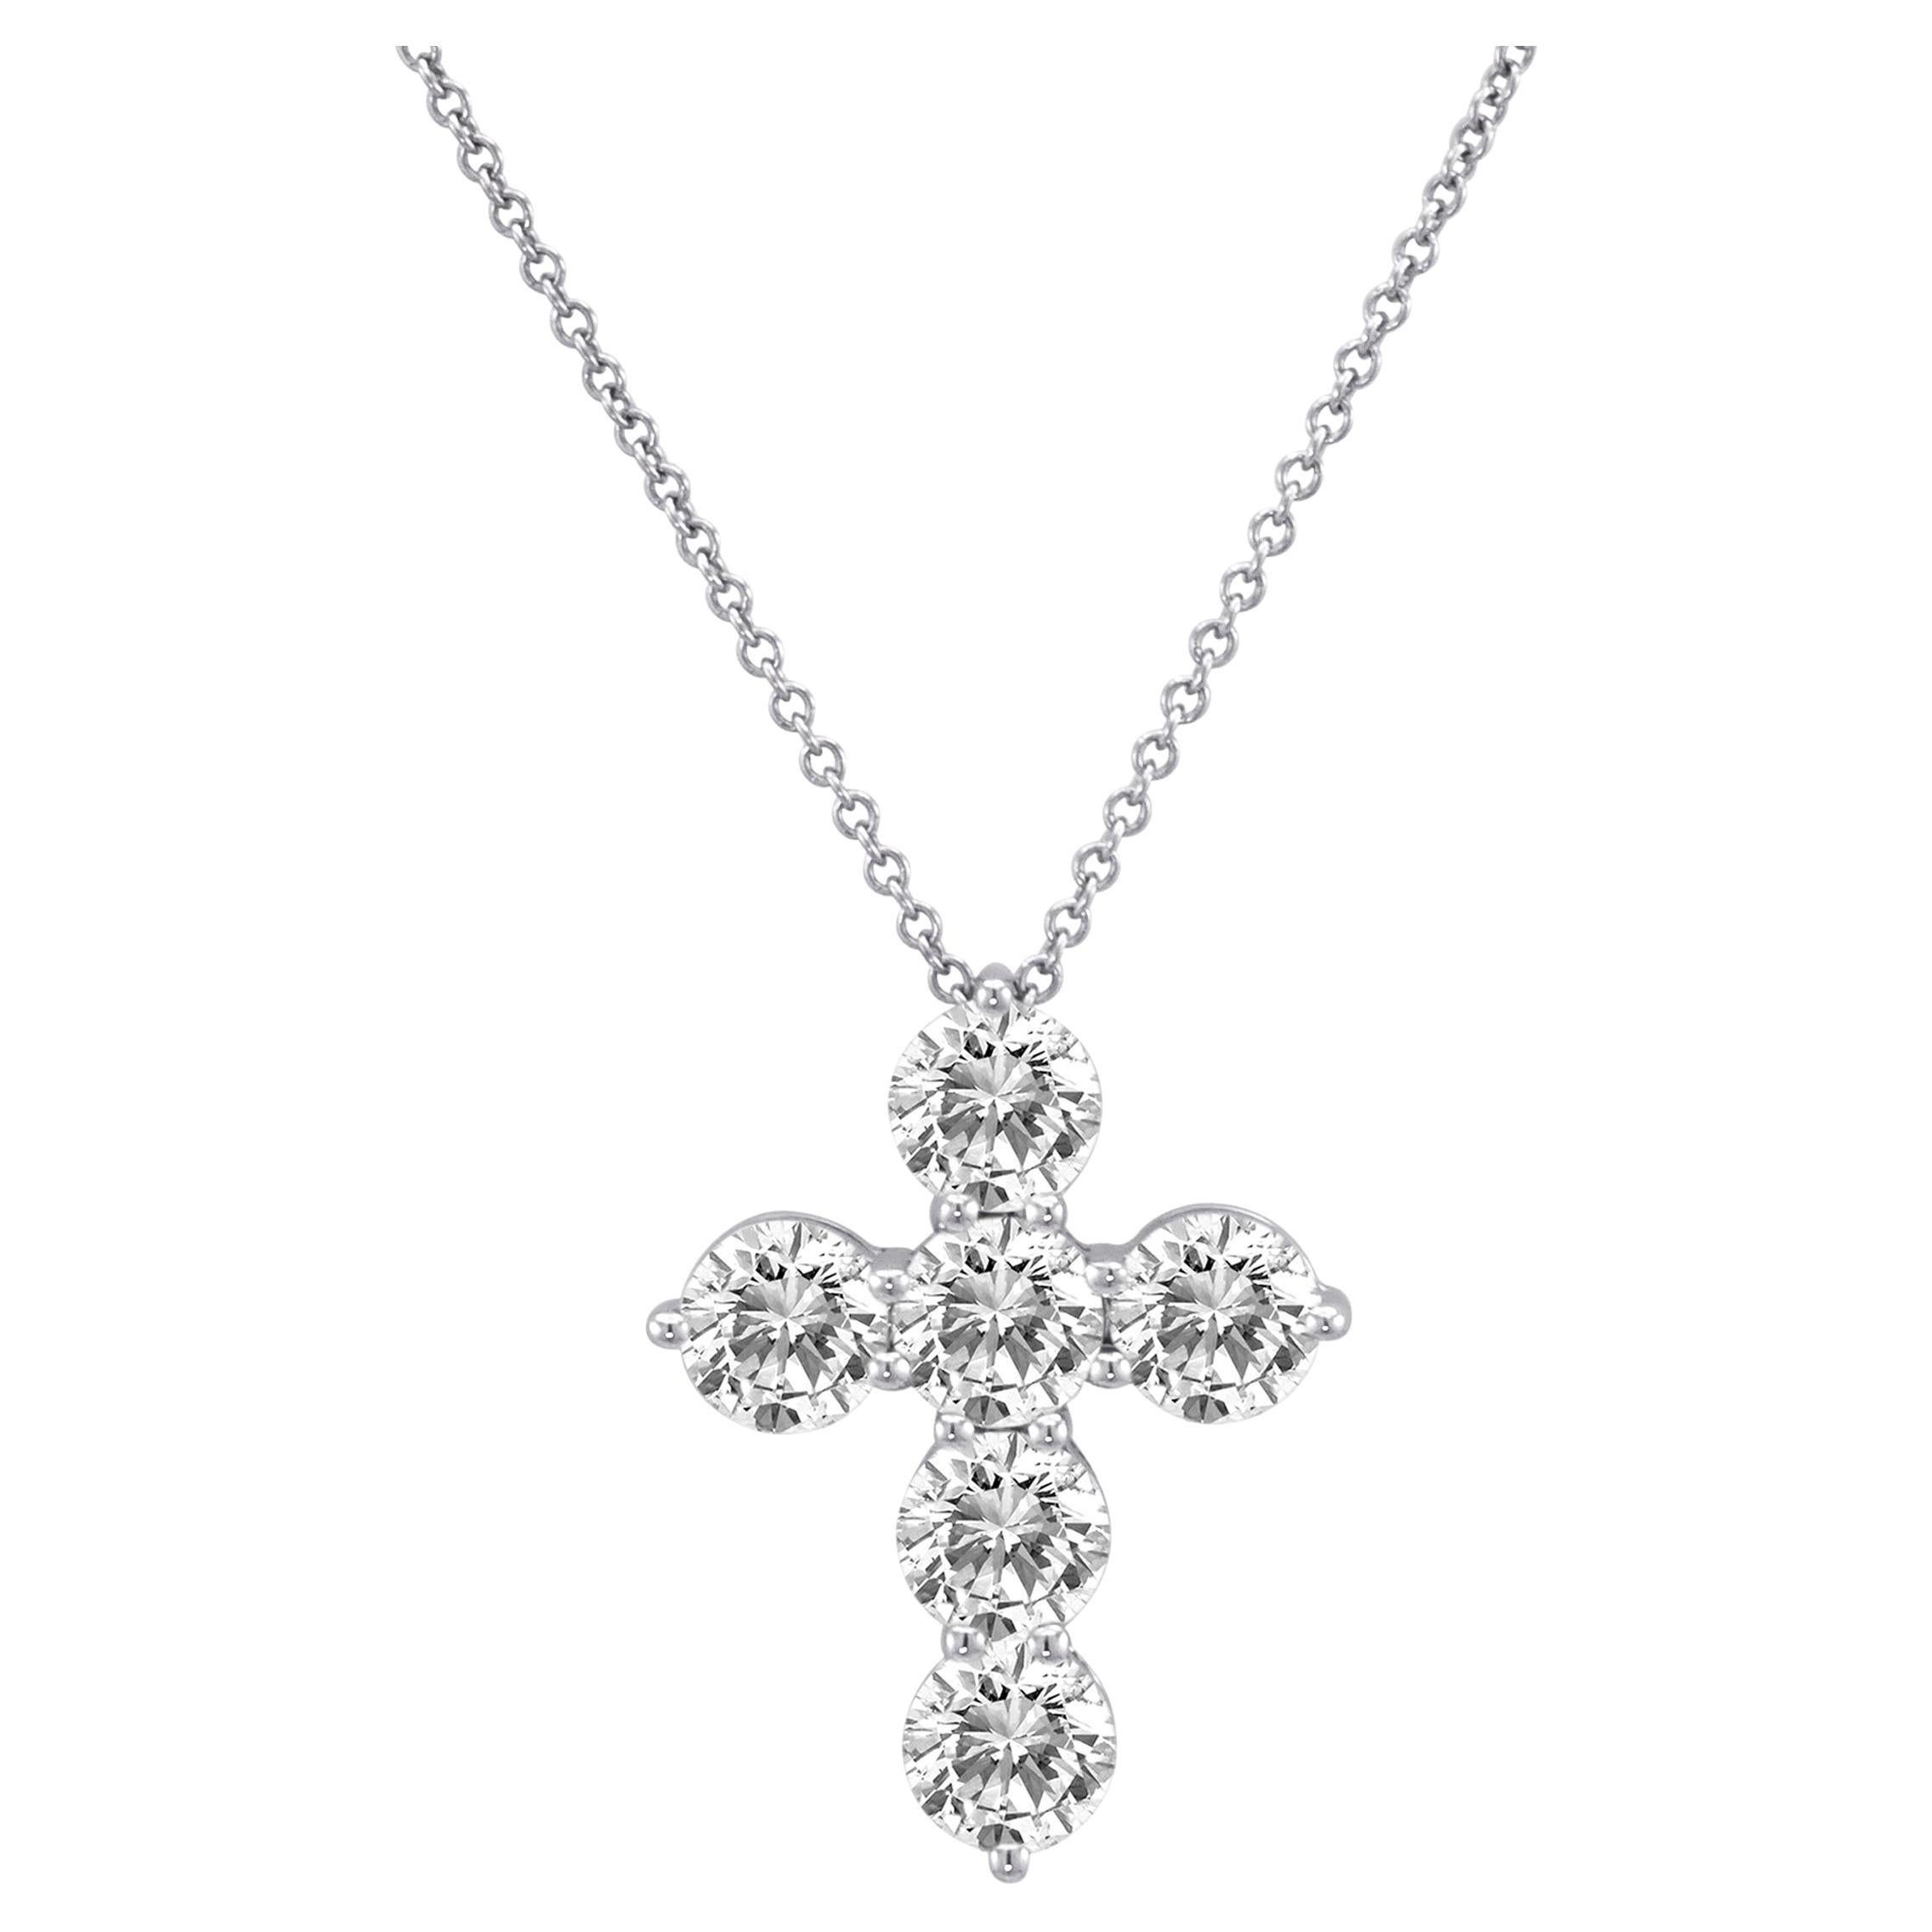 Diana M. 18K 1.50 ct. tw. Diamond Cross Pendant Necklace